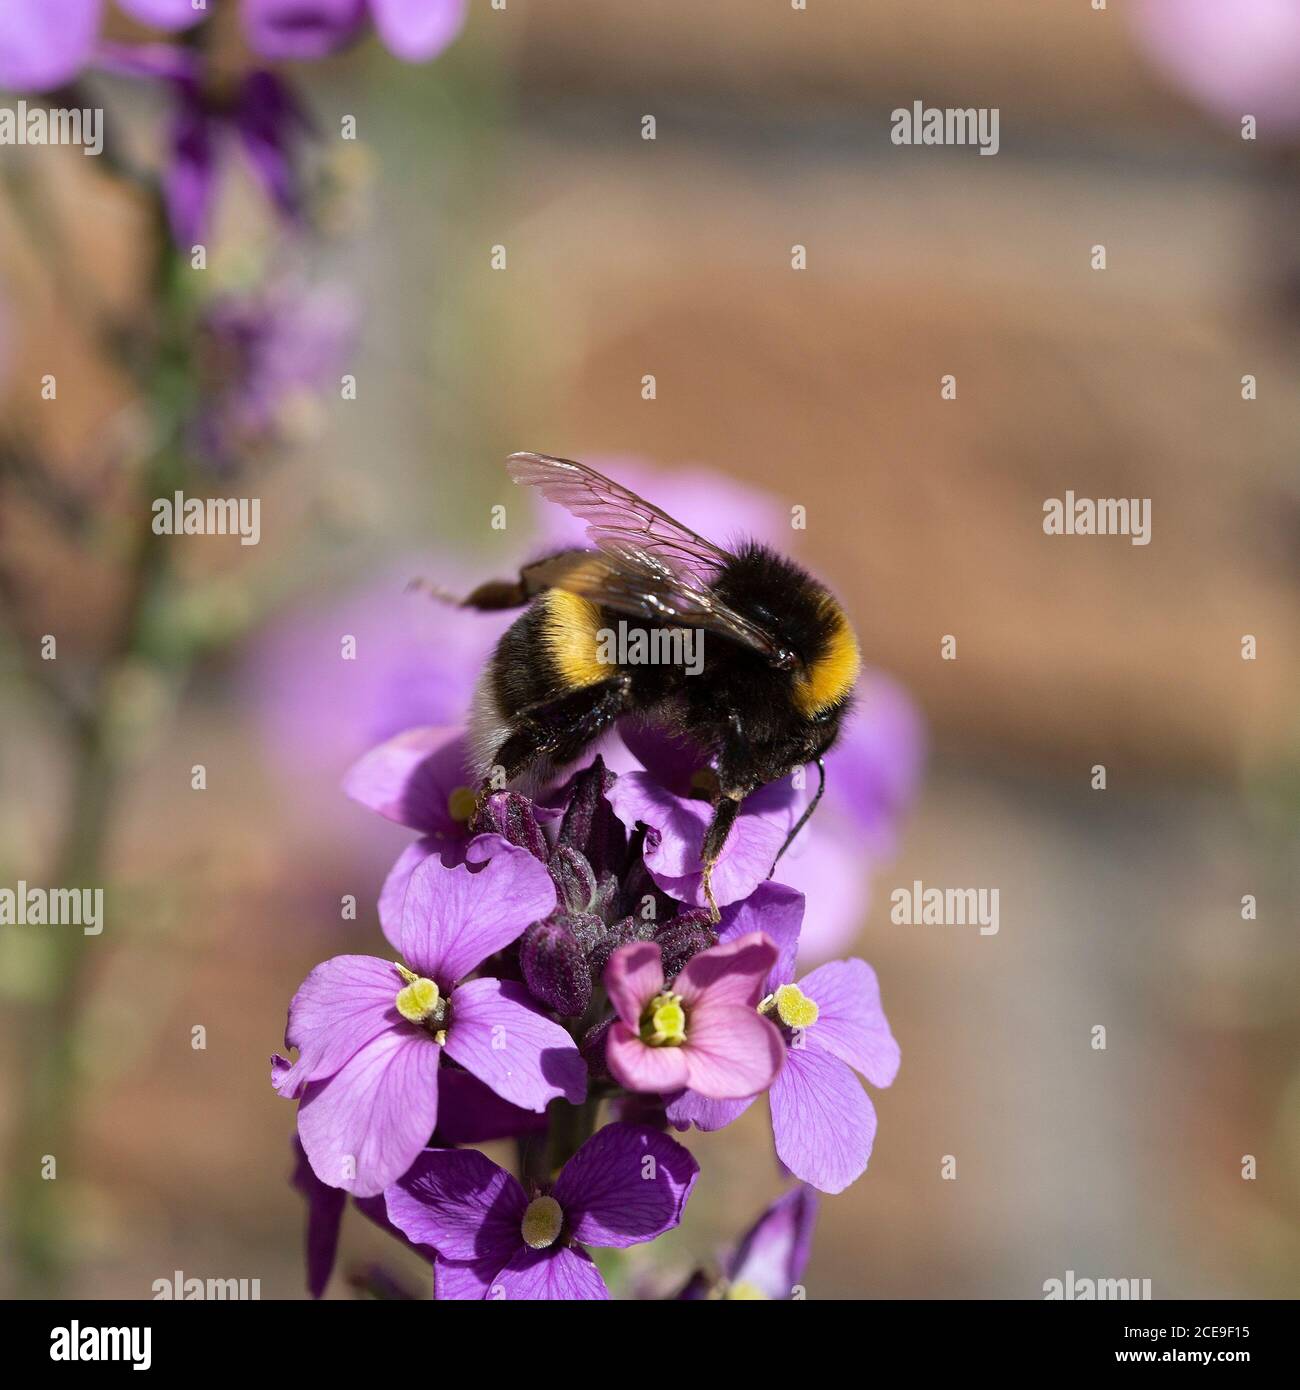 Buff-tailed bumblebee (Bombus terrestris) on Erysimum flowers Stock Photo